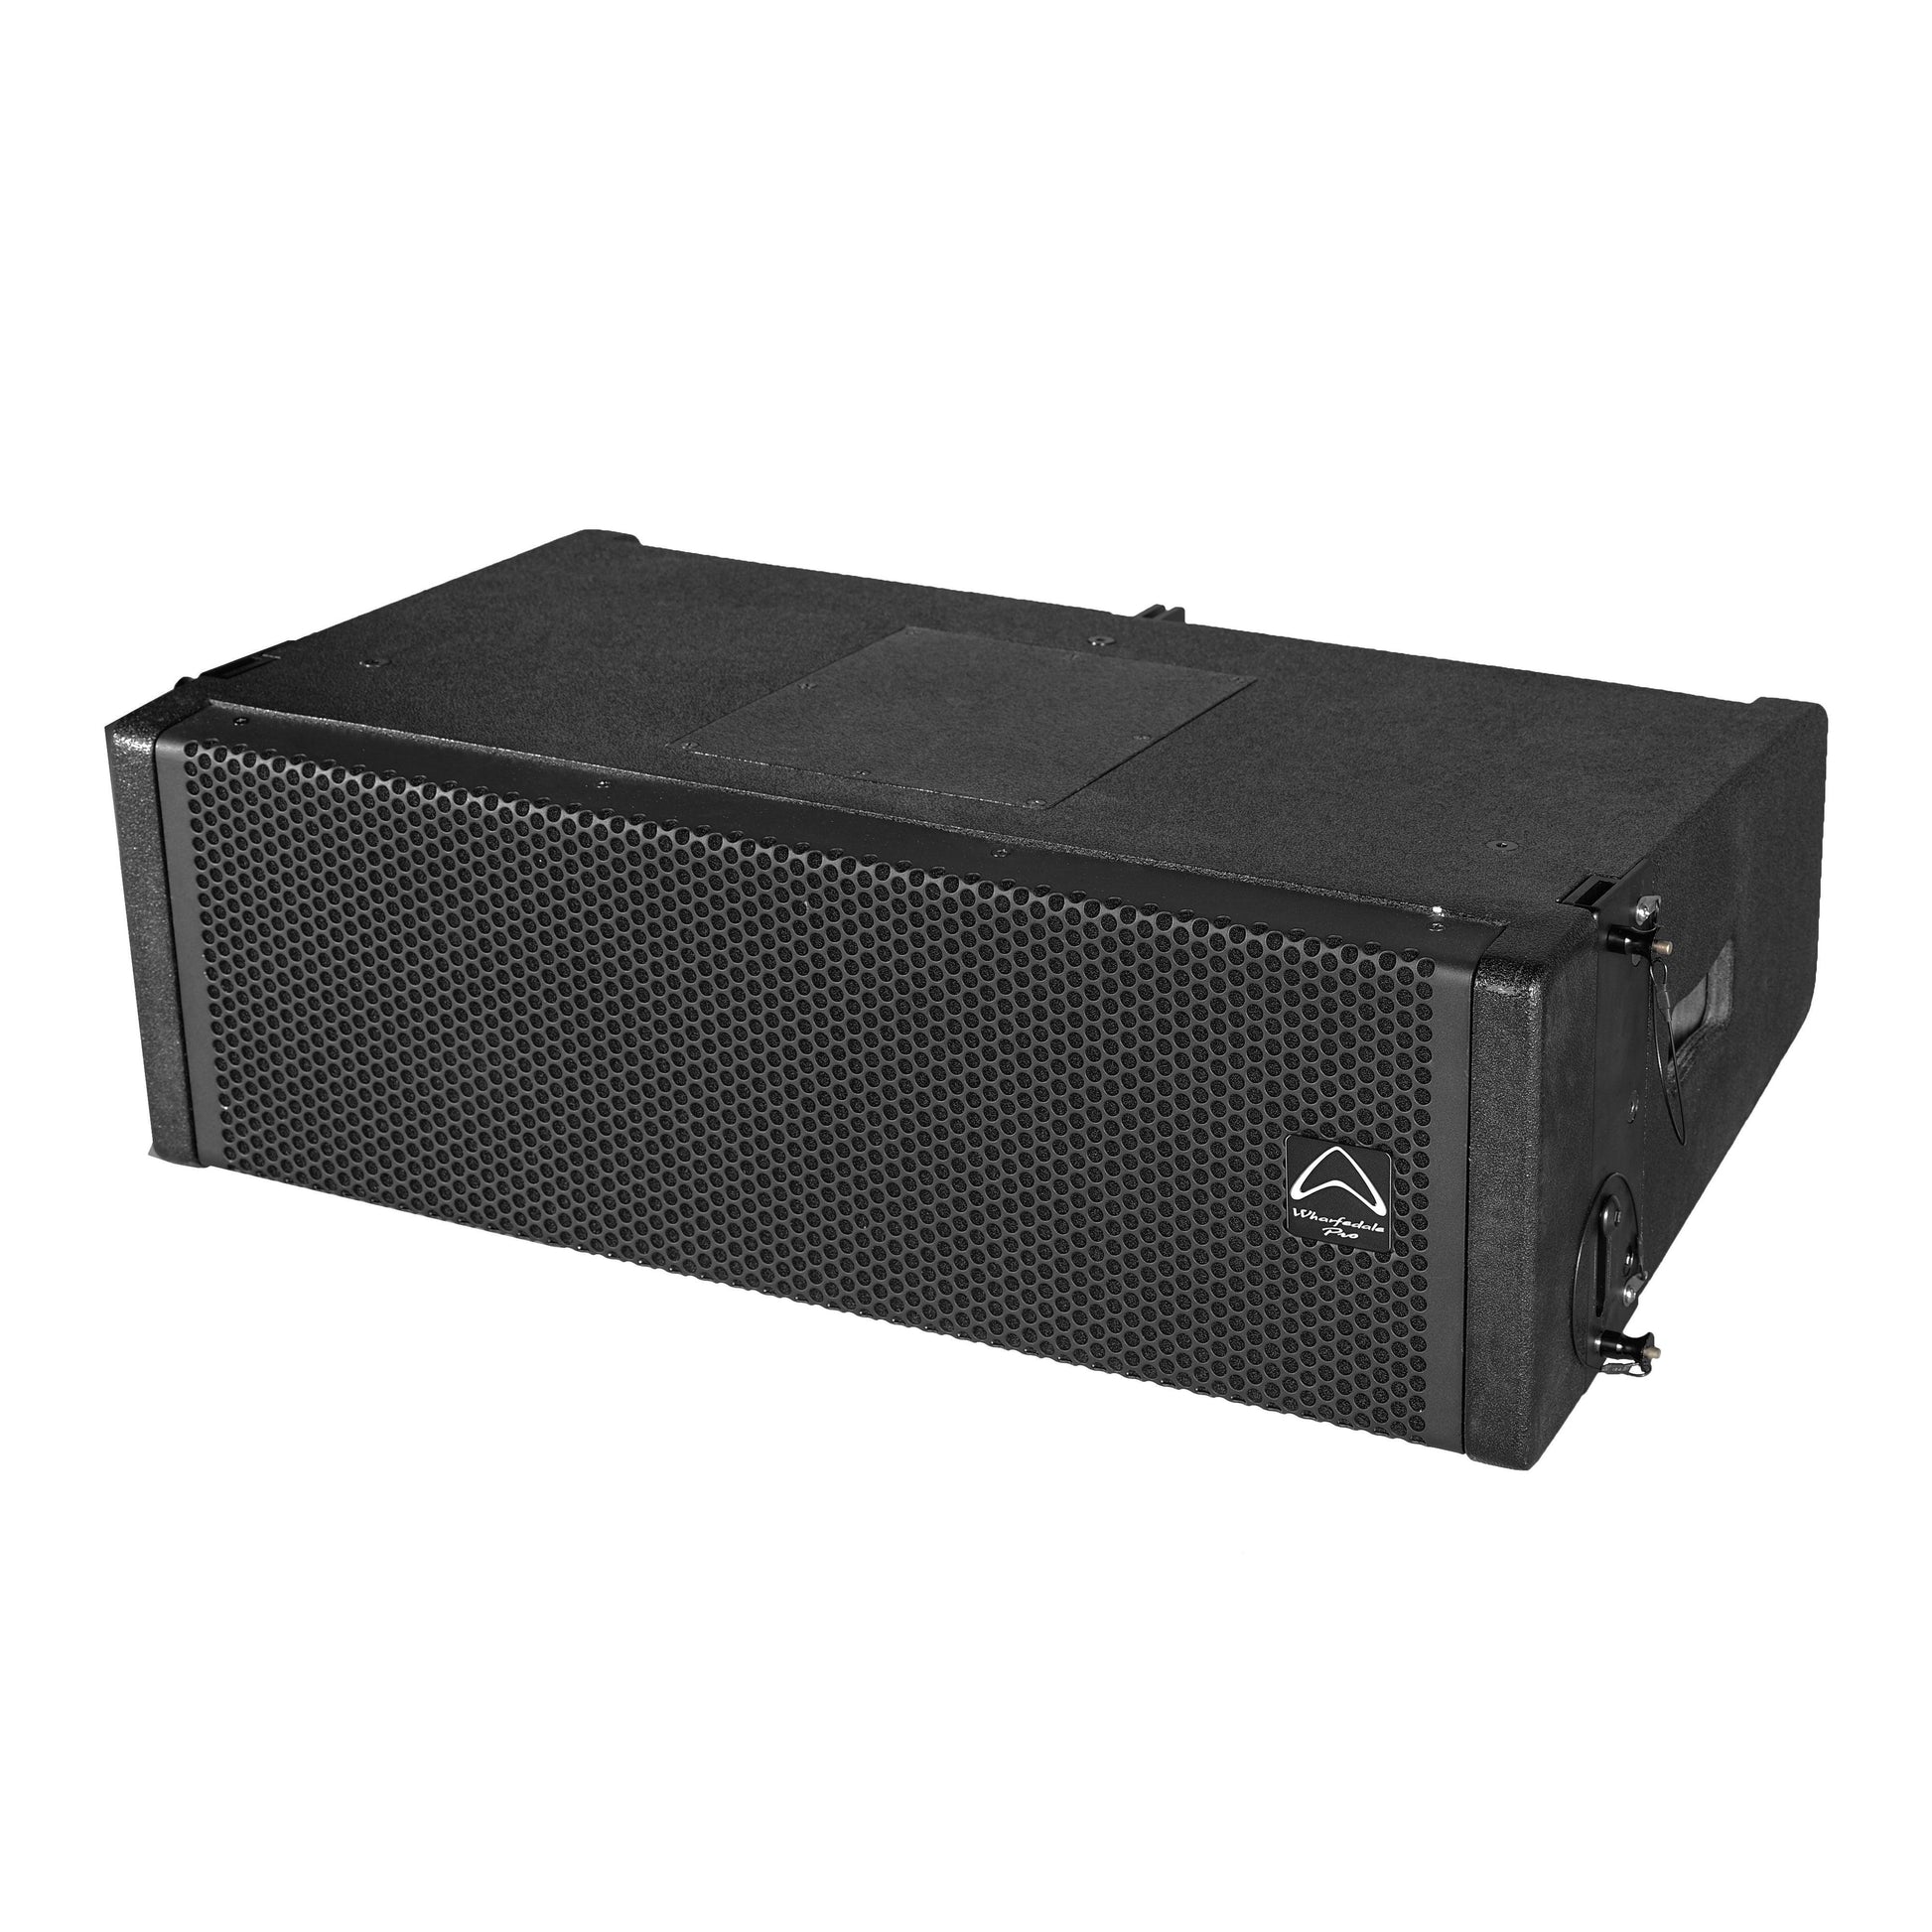 Wharfedale Pro WLA28A Line Array Active PA Speaker